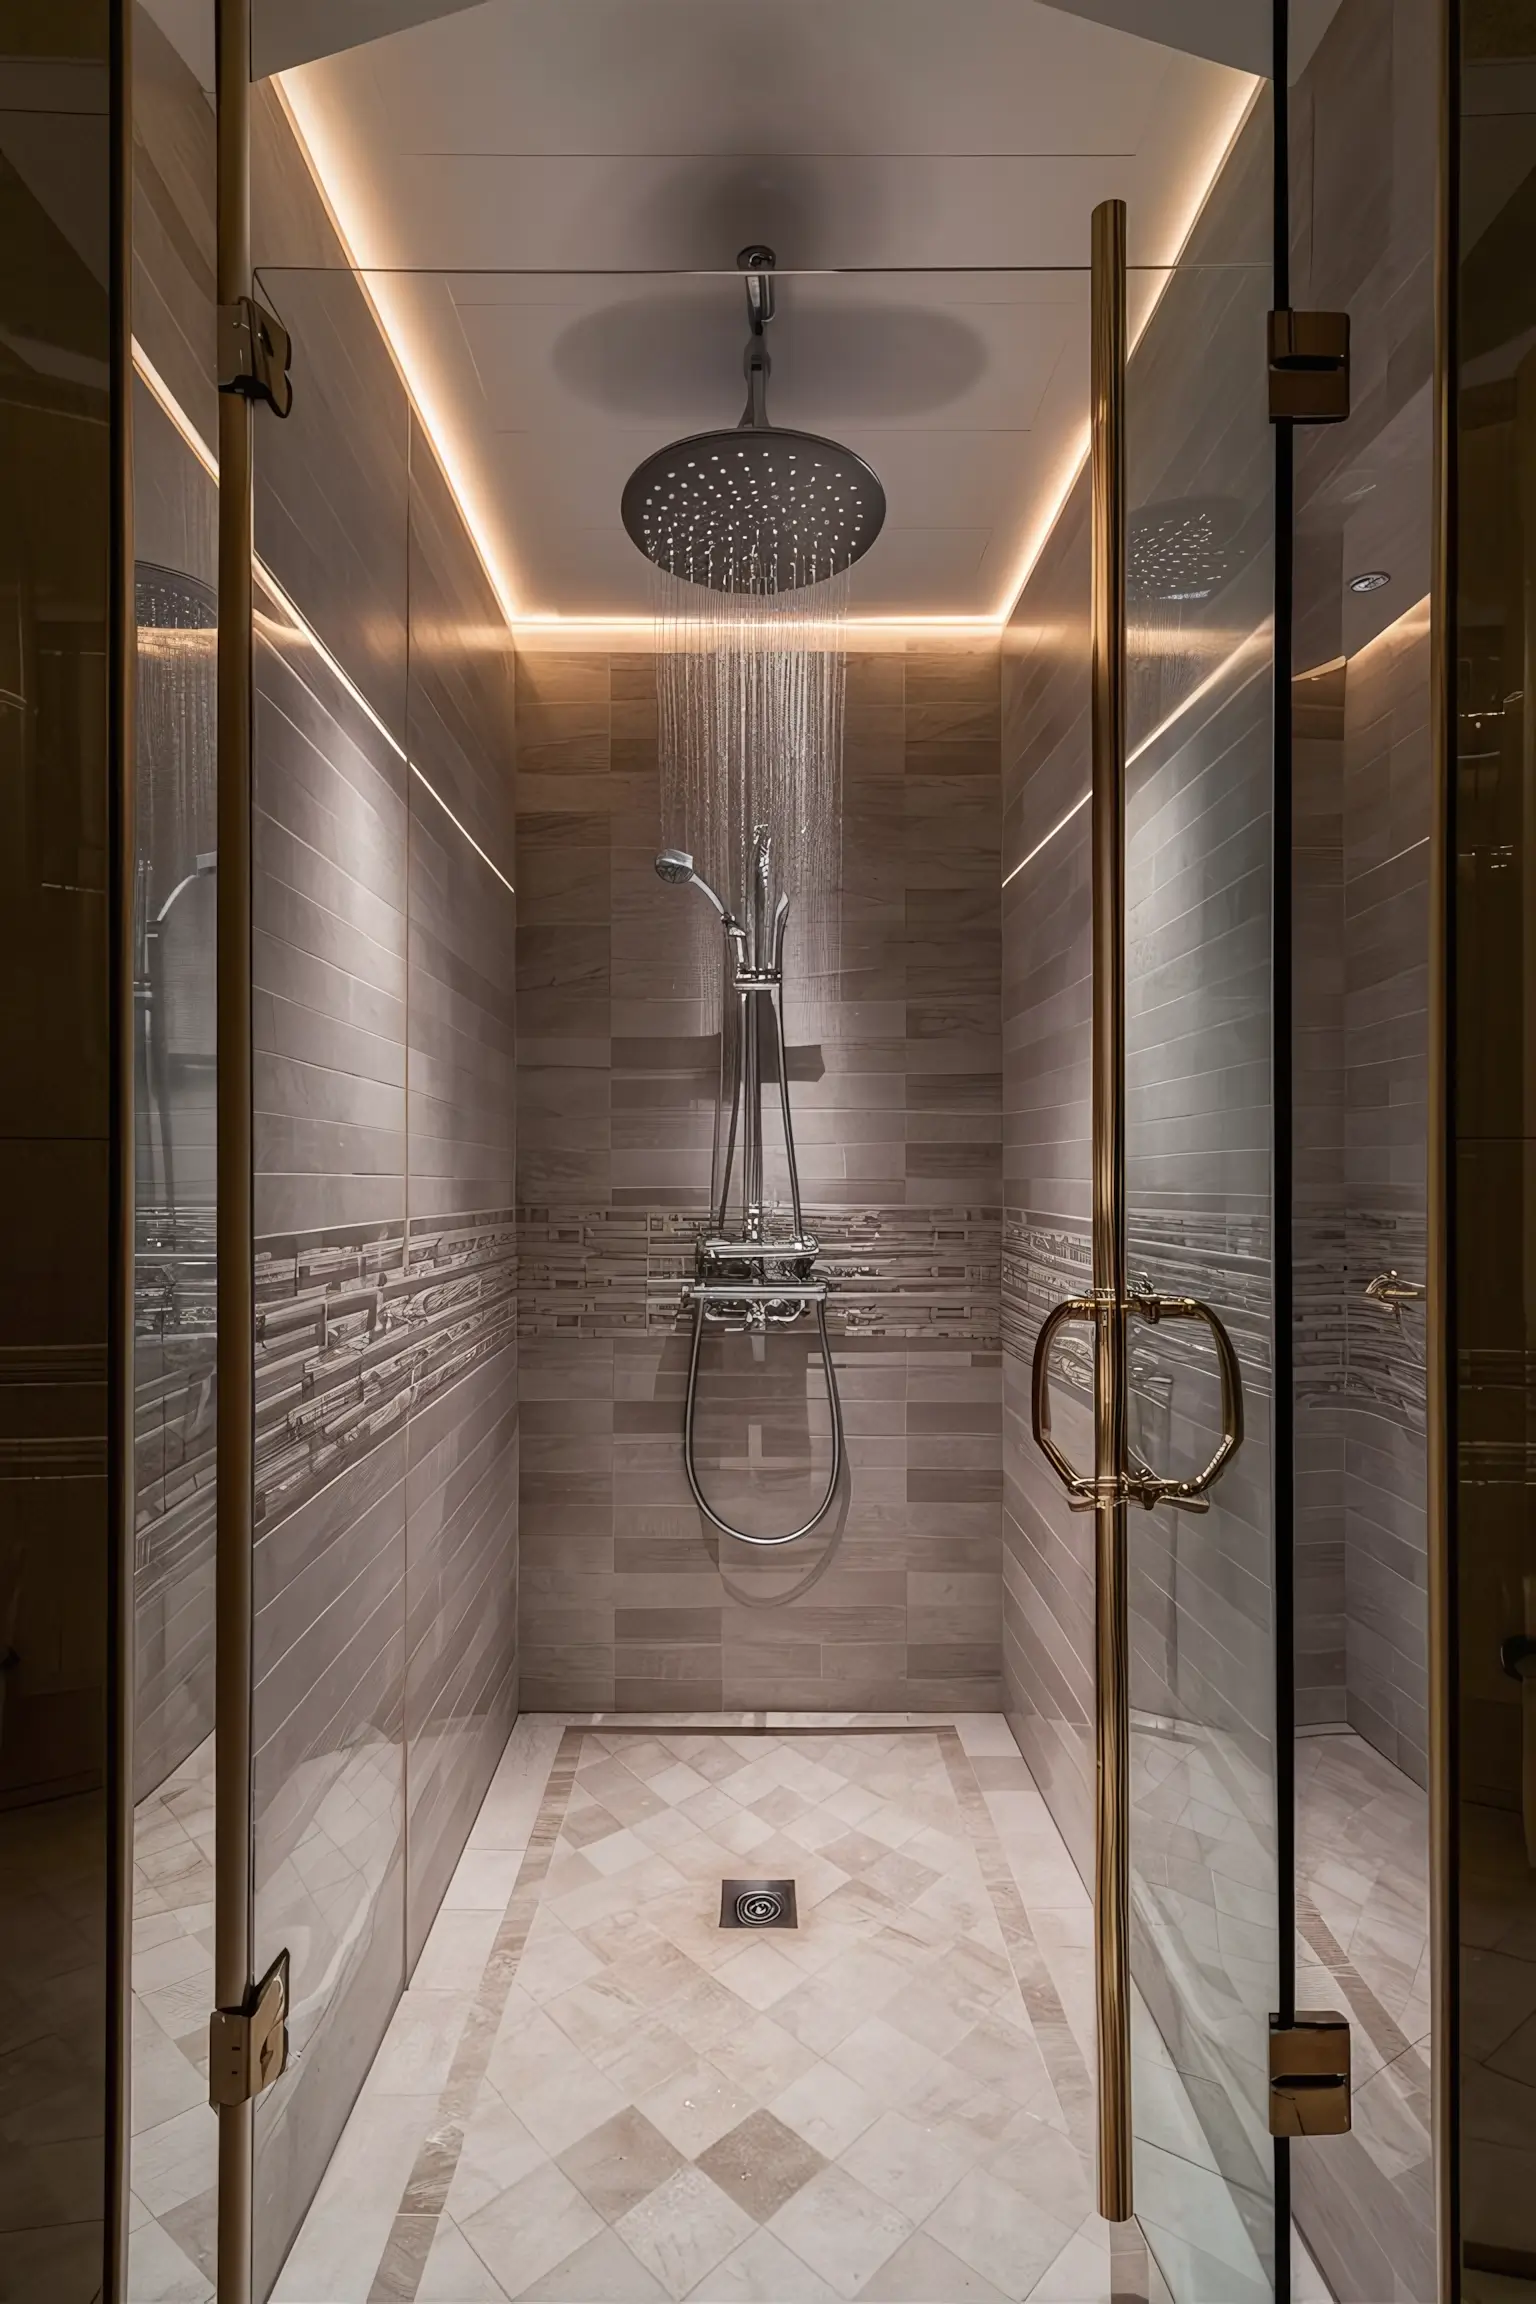 Small modern luxury bathroom with a walk-in shower, frameless glass door, and rainfall showerhead.